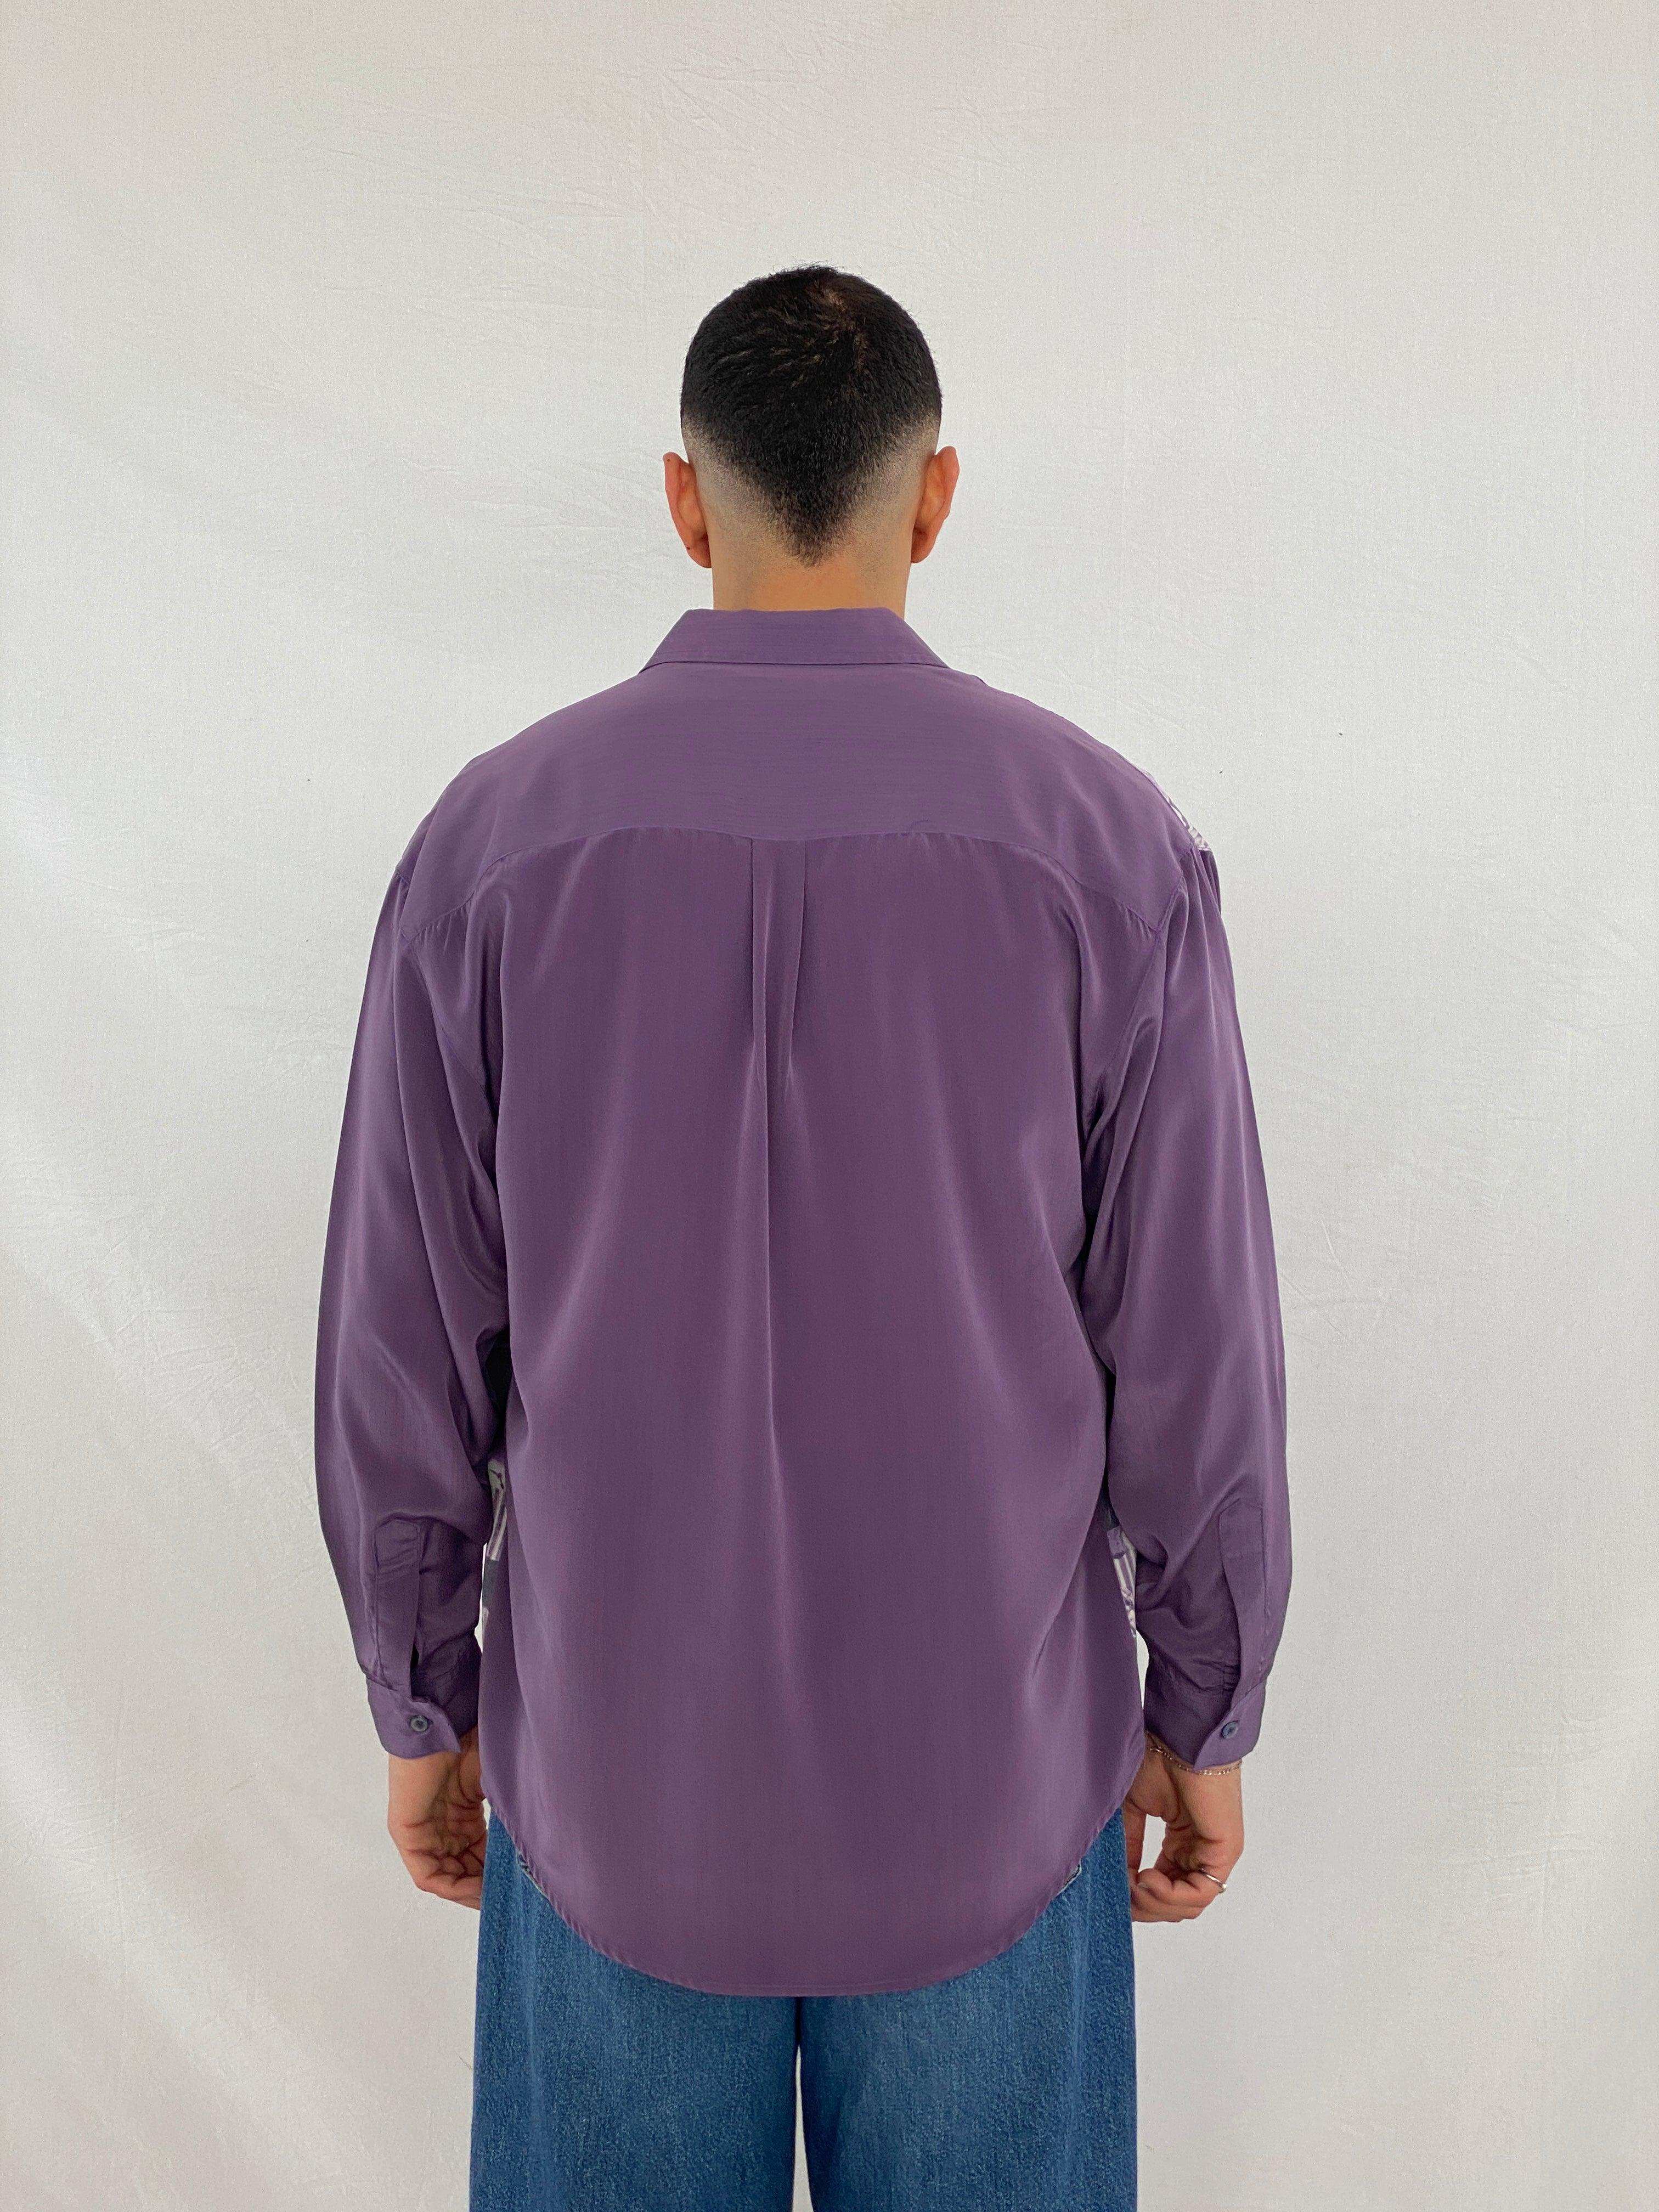 Vintage Superior Boy Full-Sleeve Shirt - Balagan Vintage Full Sleeve Shirt 90s, Abdullah, full sleeve shirt, NEW IN